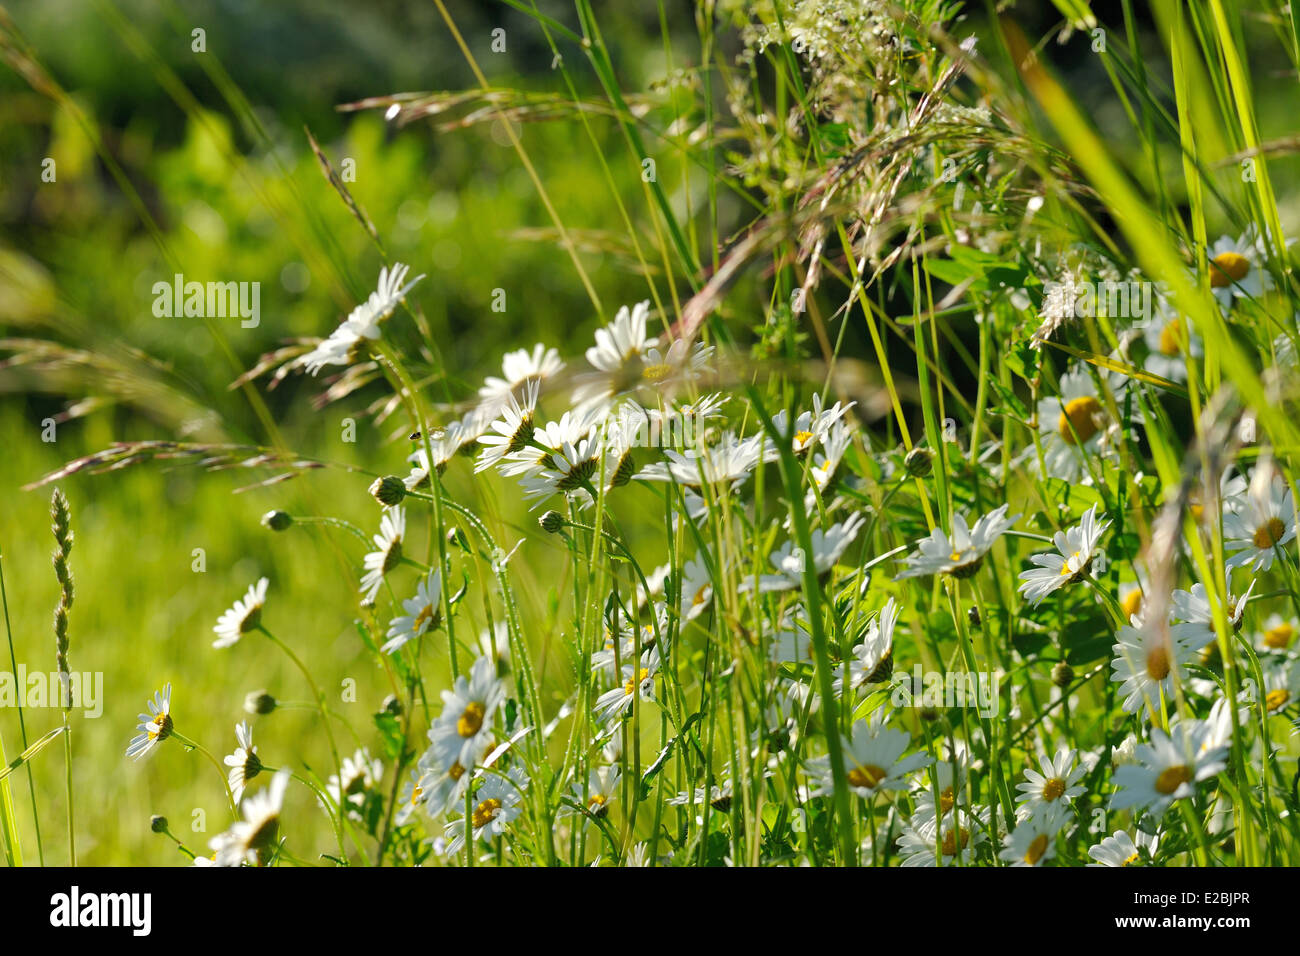 Oxeye daisy (Leucanthemum vulgare) flowers in green grass Stock Photo